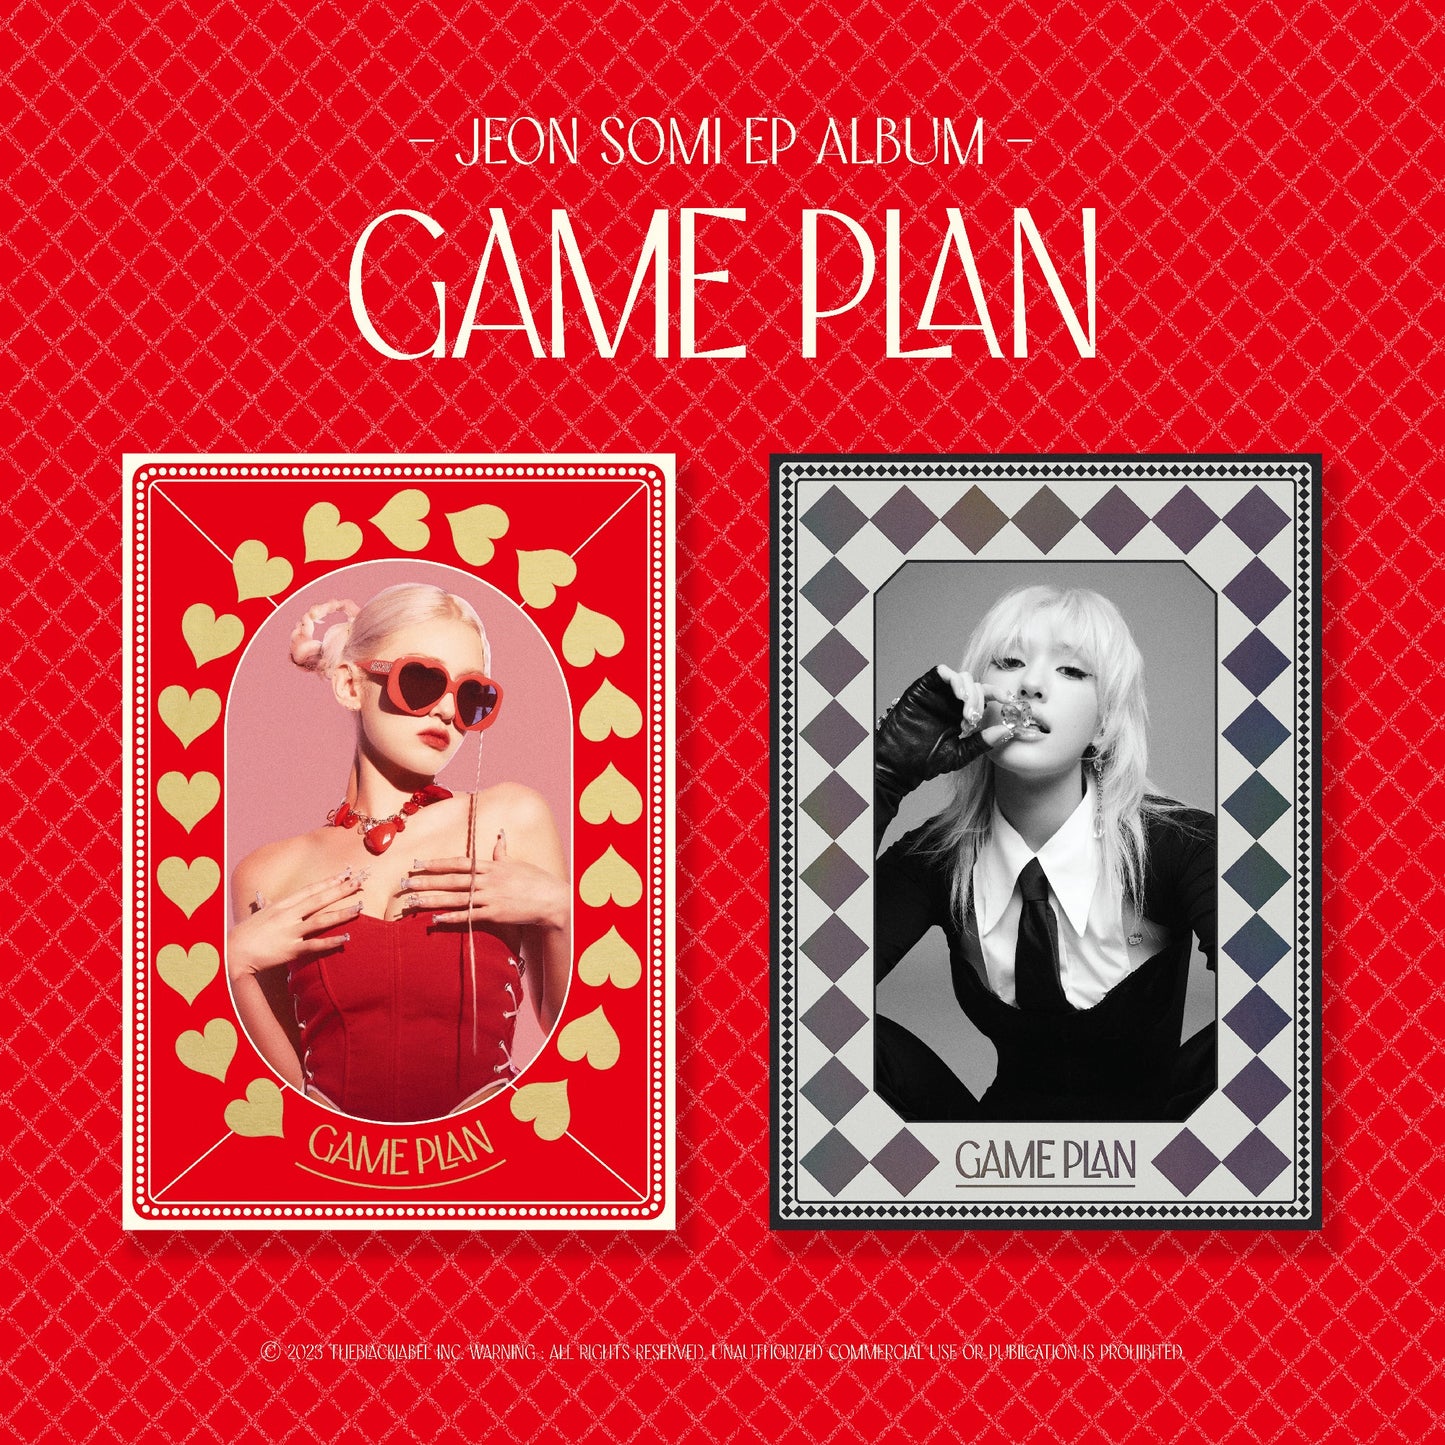 JEON SOMI EP ALBUM 'GAME PLAN' (PHOTOBOOK) SET COVER